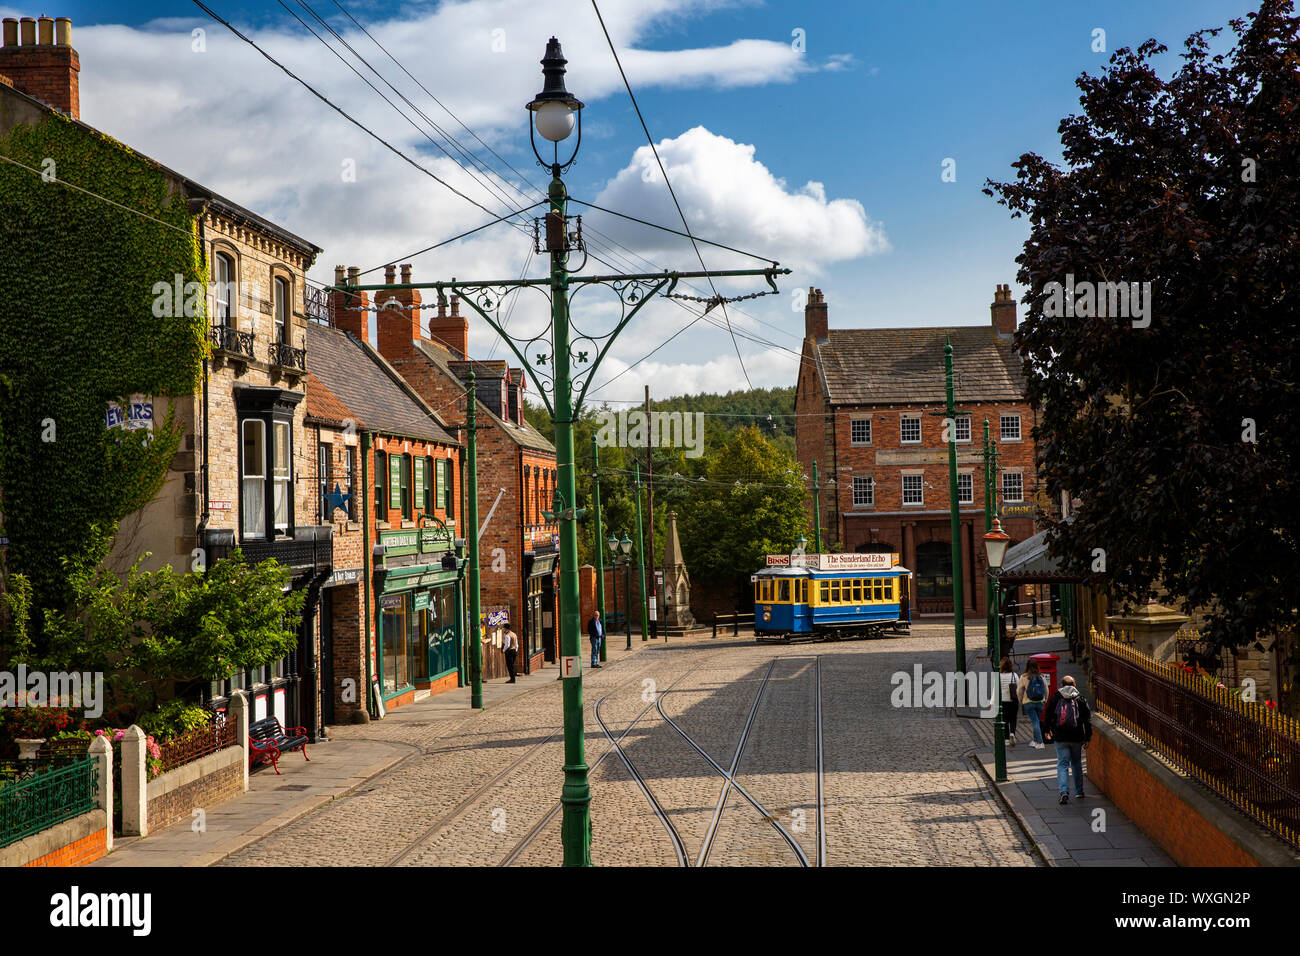 UK, County Durham, Beamish, Museum, Town, Main Street shops and tram Stock Photo